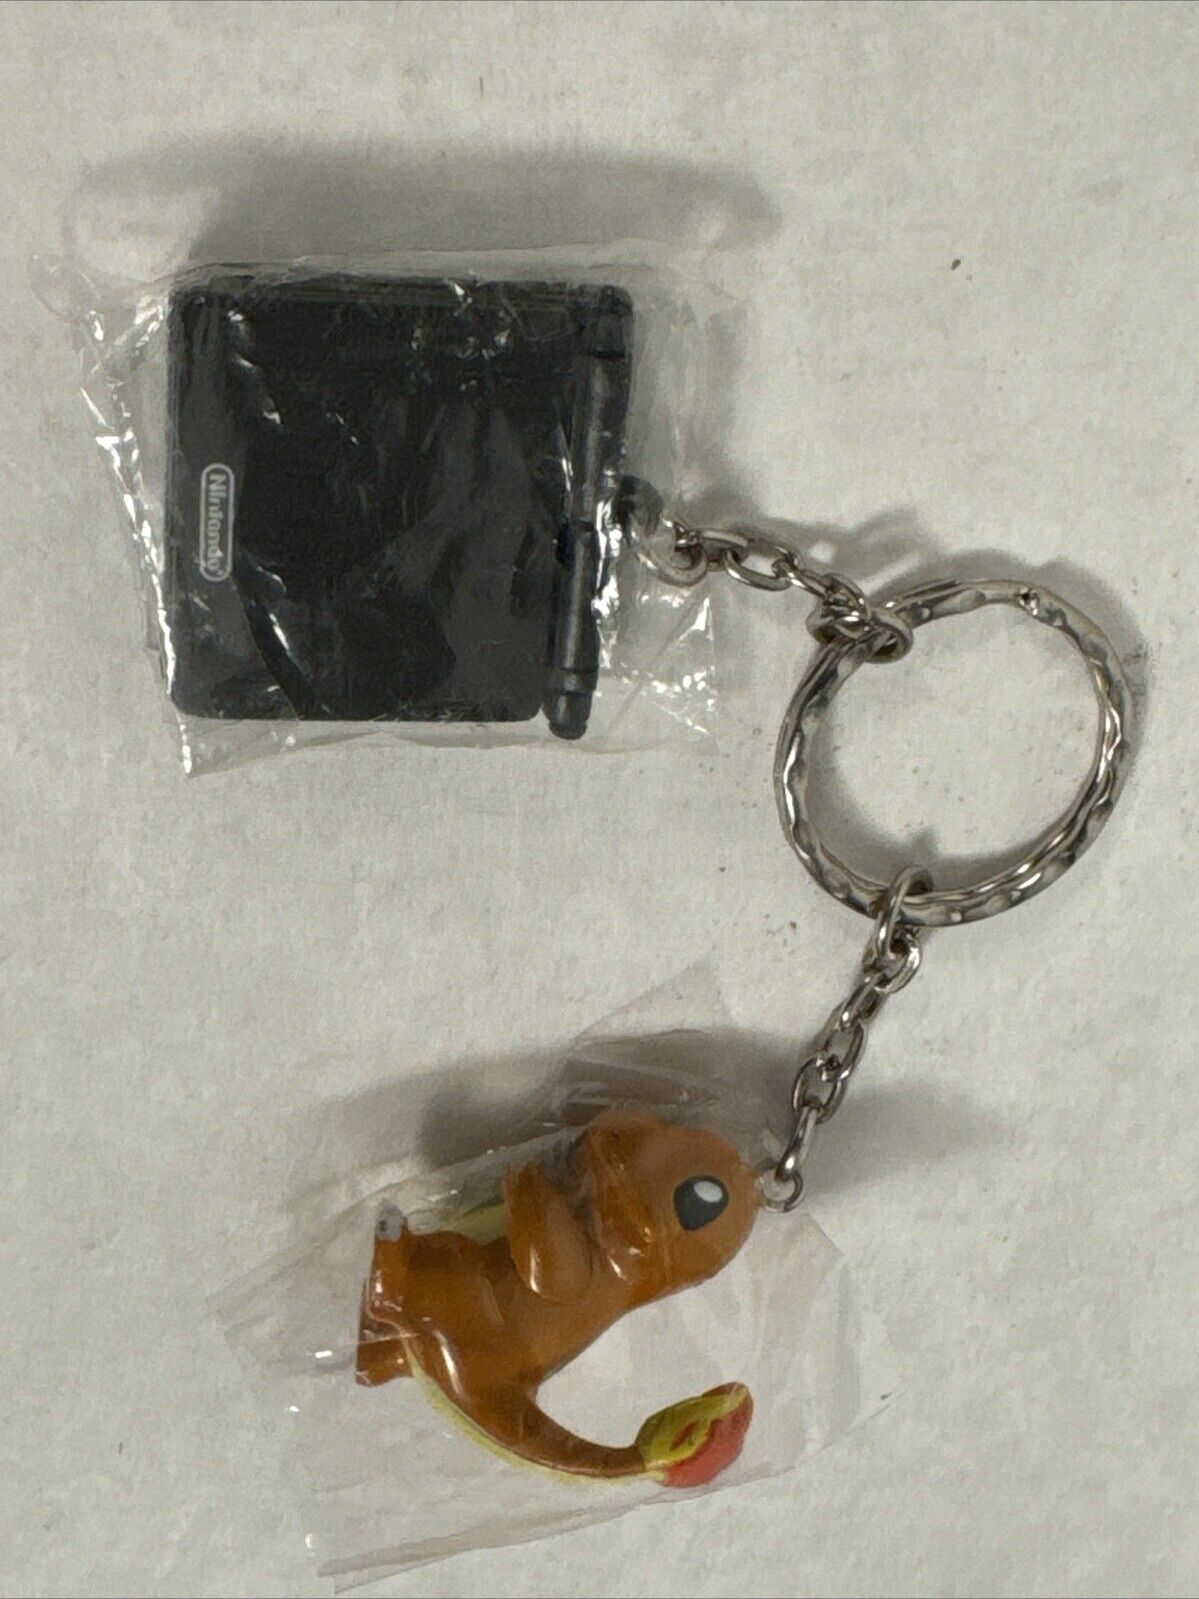 Rare Pokemon Charmander & Game Boy Advance SP Miniature Figure Keychain JAPAN